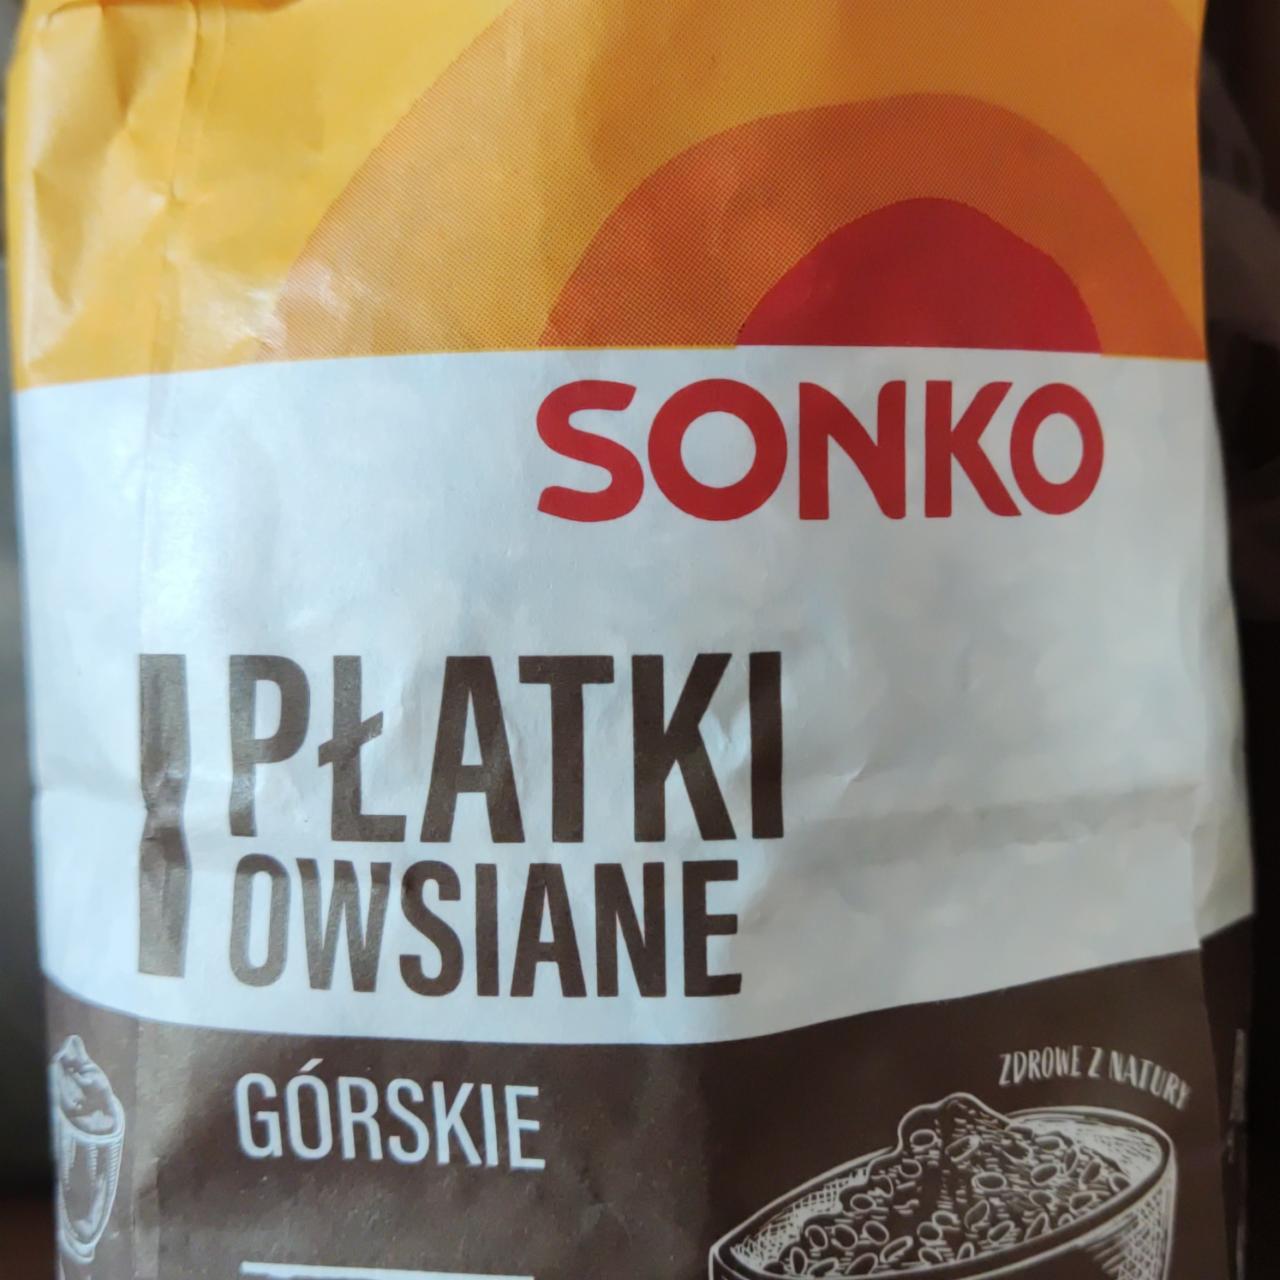 Фото - Пластівці вівсяні Płatki Owsiane Gorskie Sonko